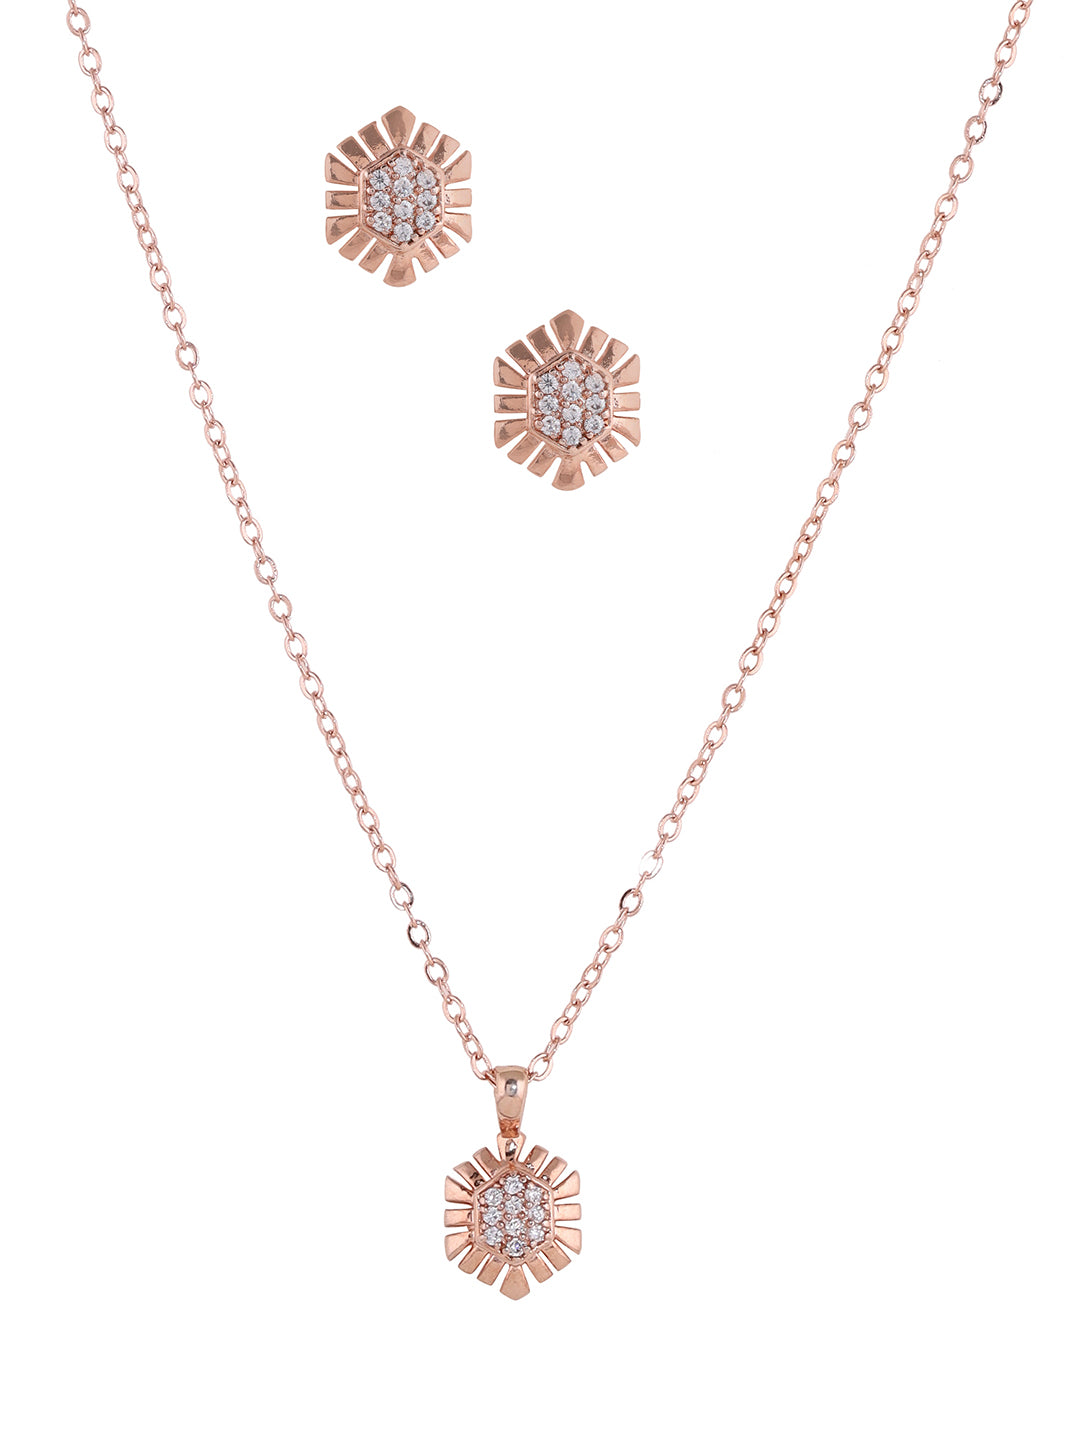 Prita American Diamond Valentine's Necklace